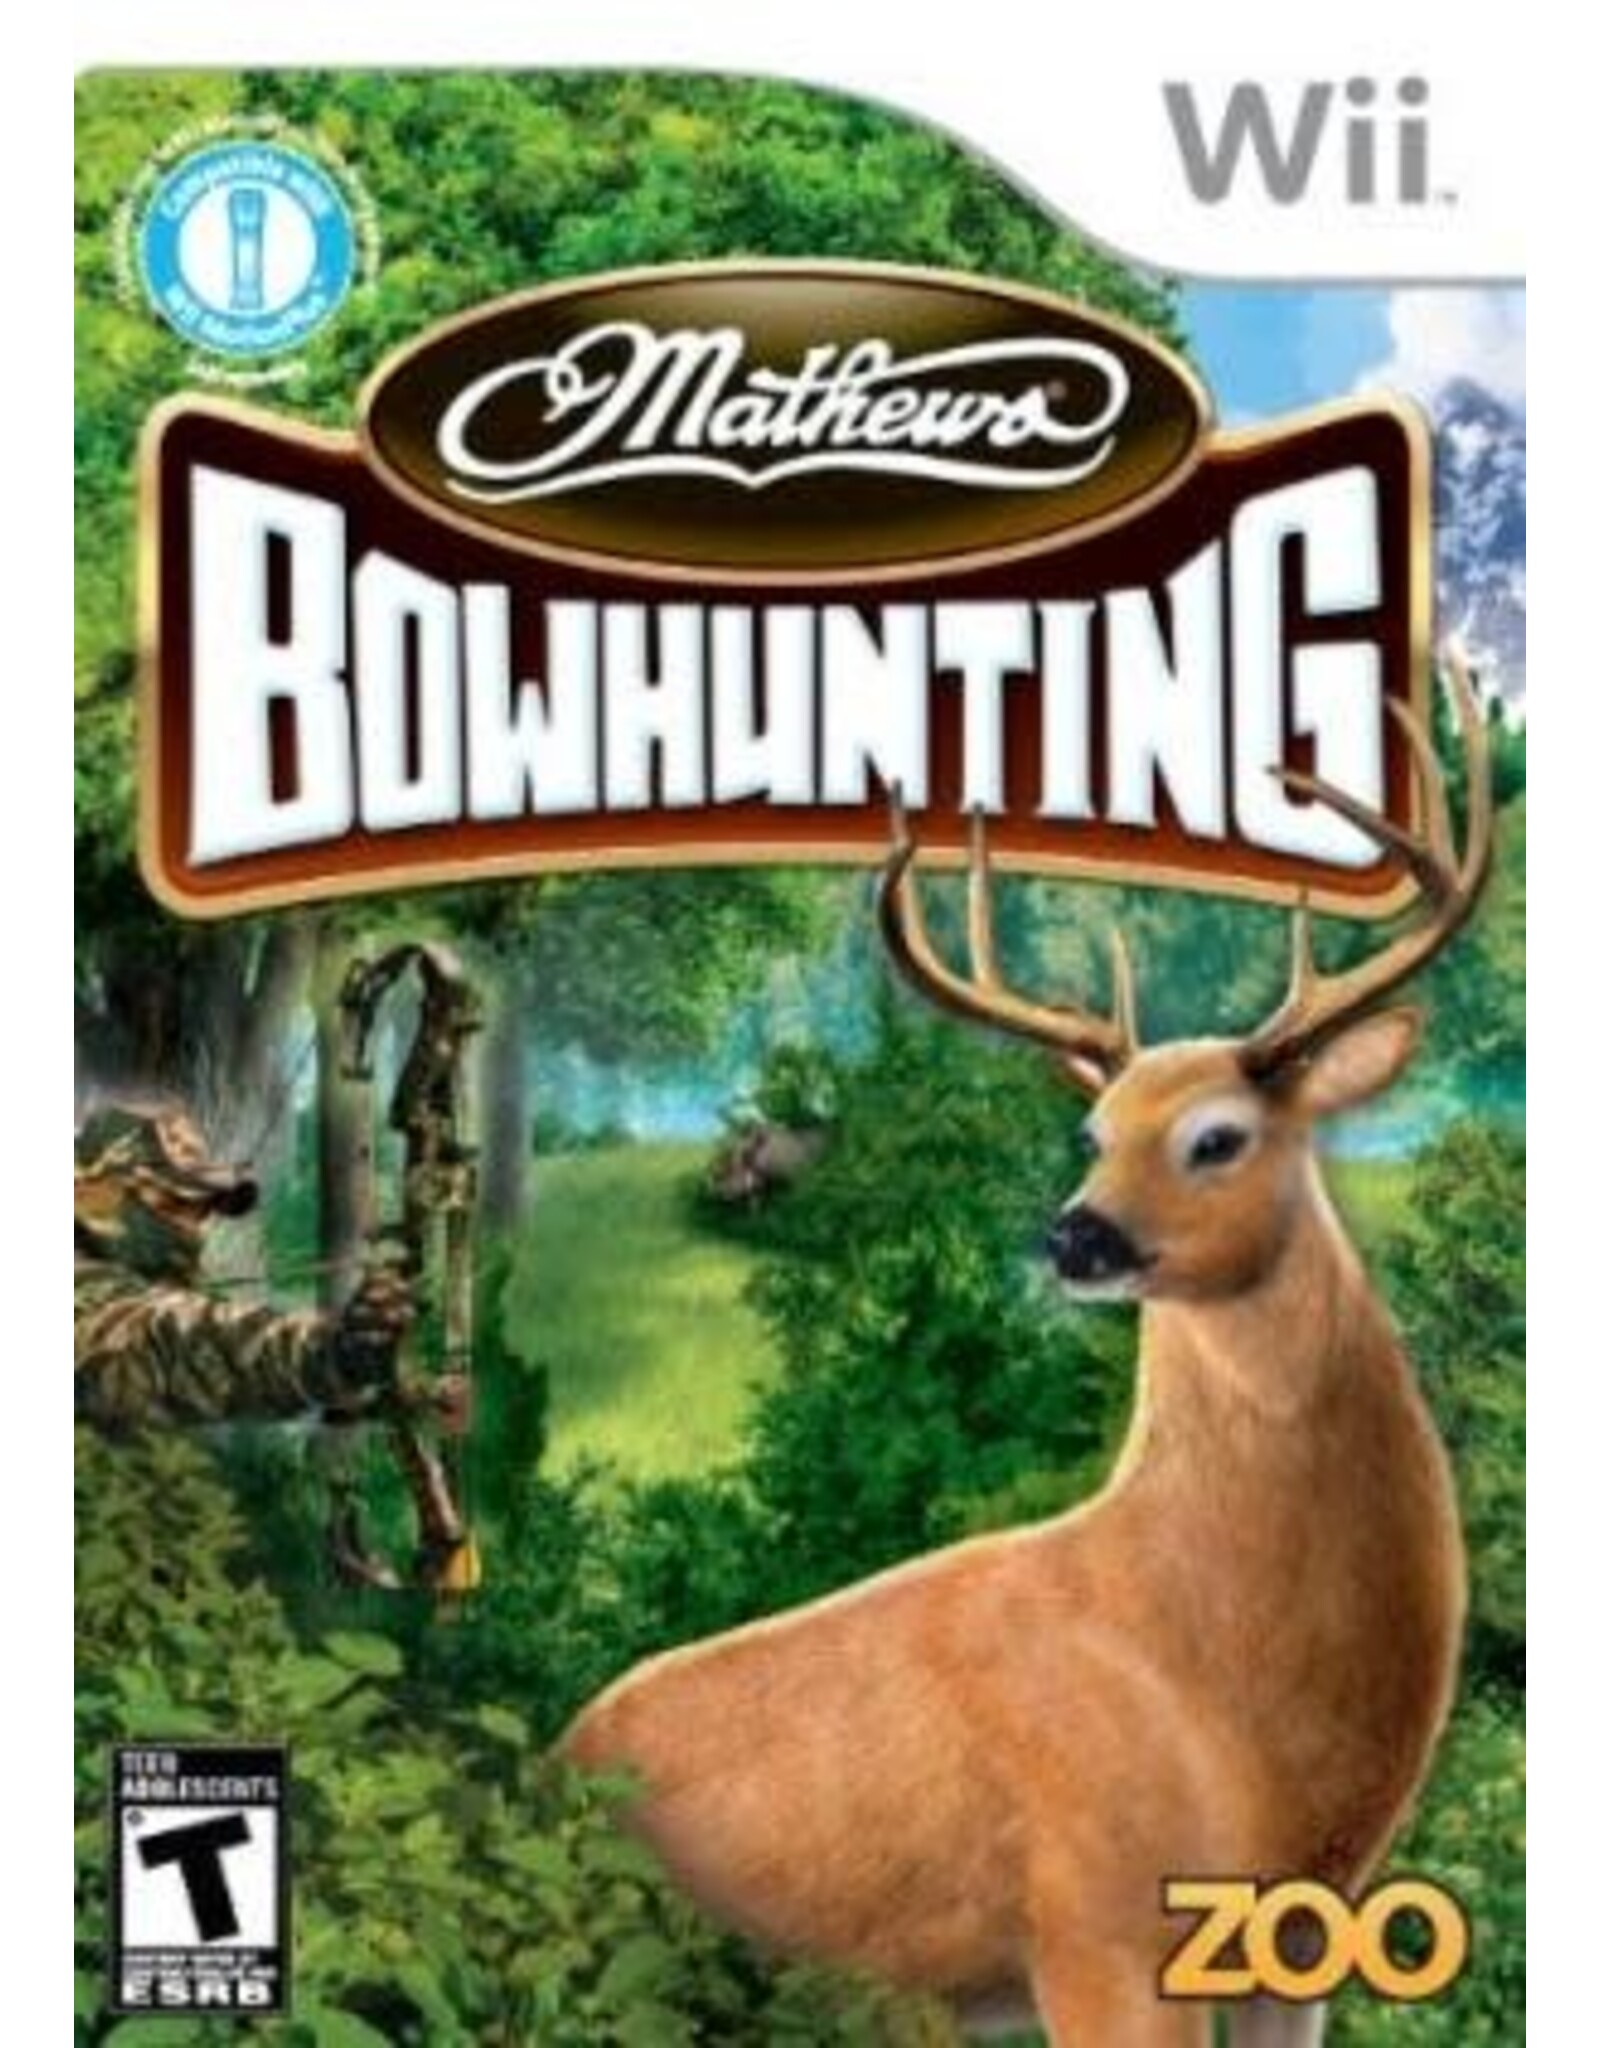 Wii Mathews Bowhunting (CiB)